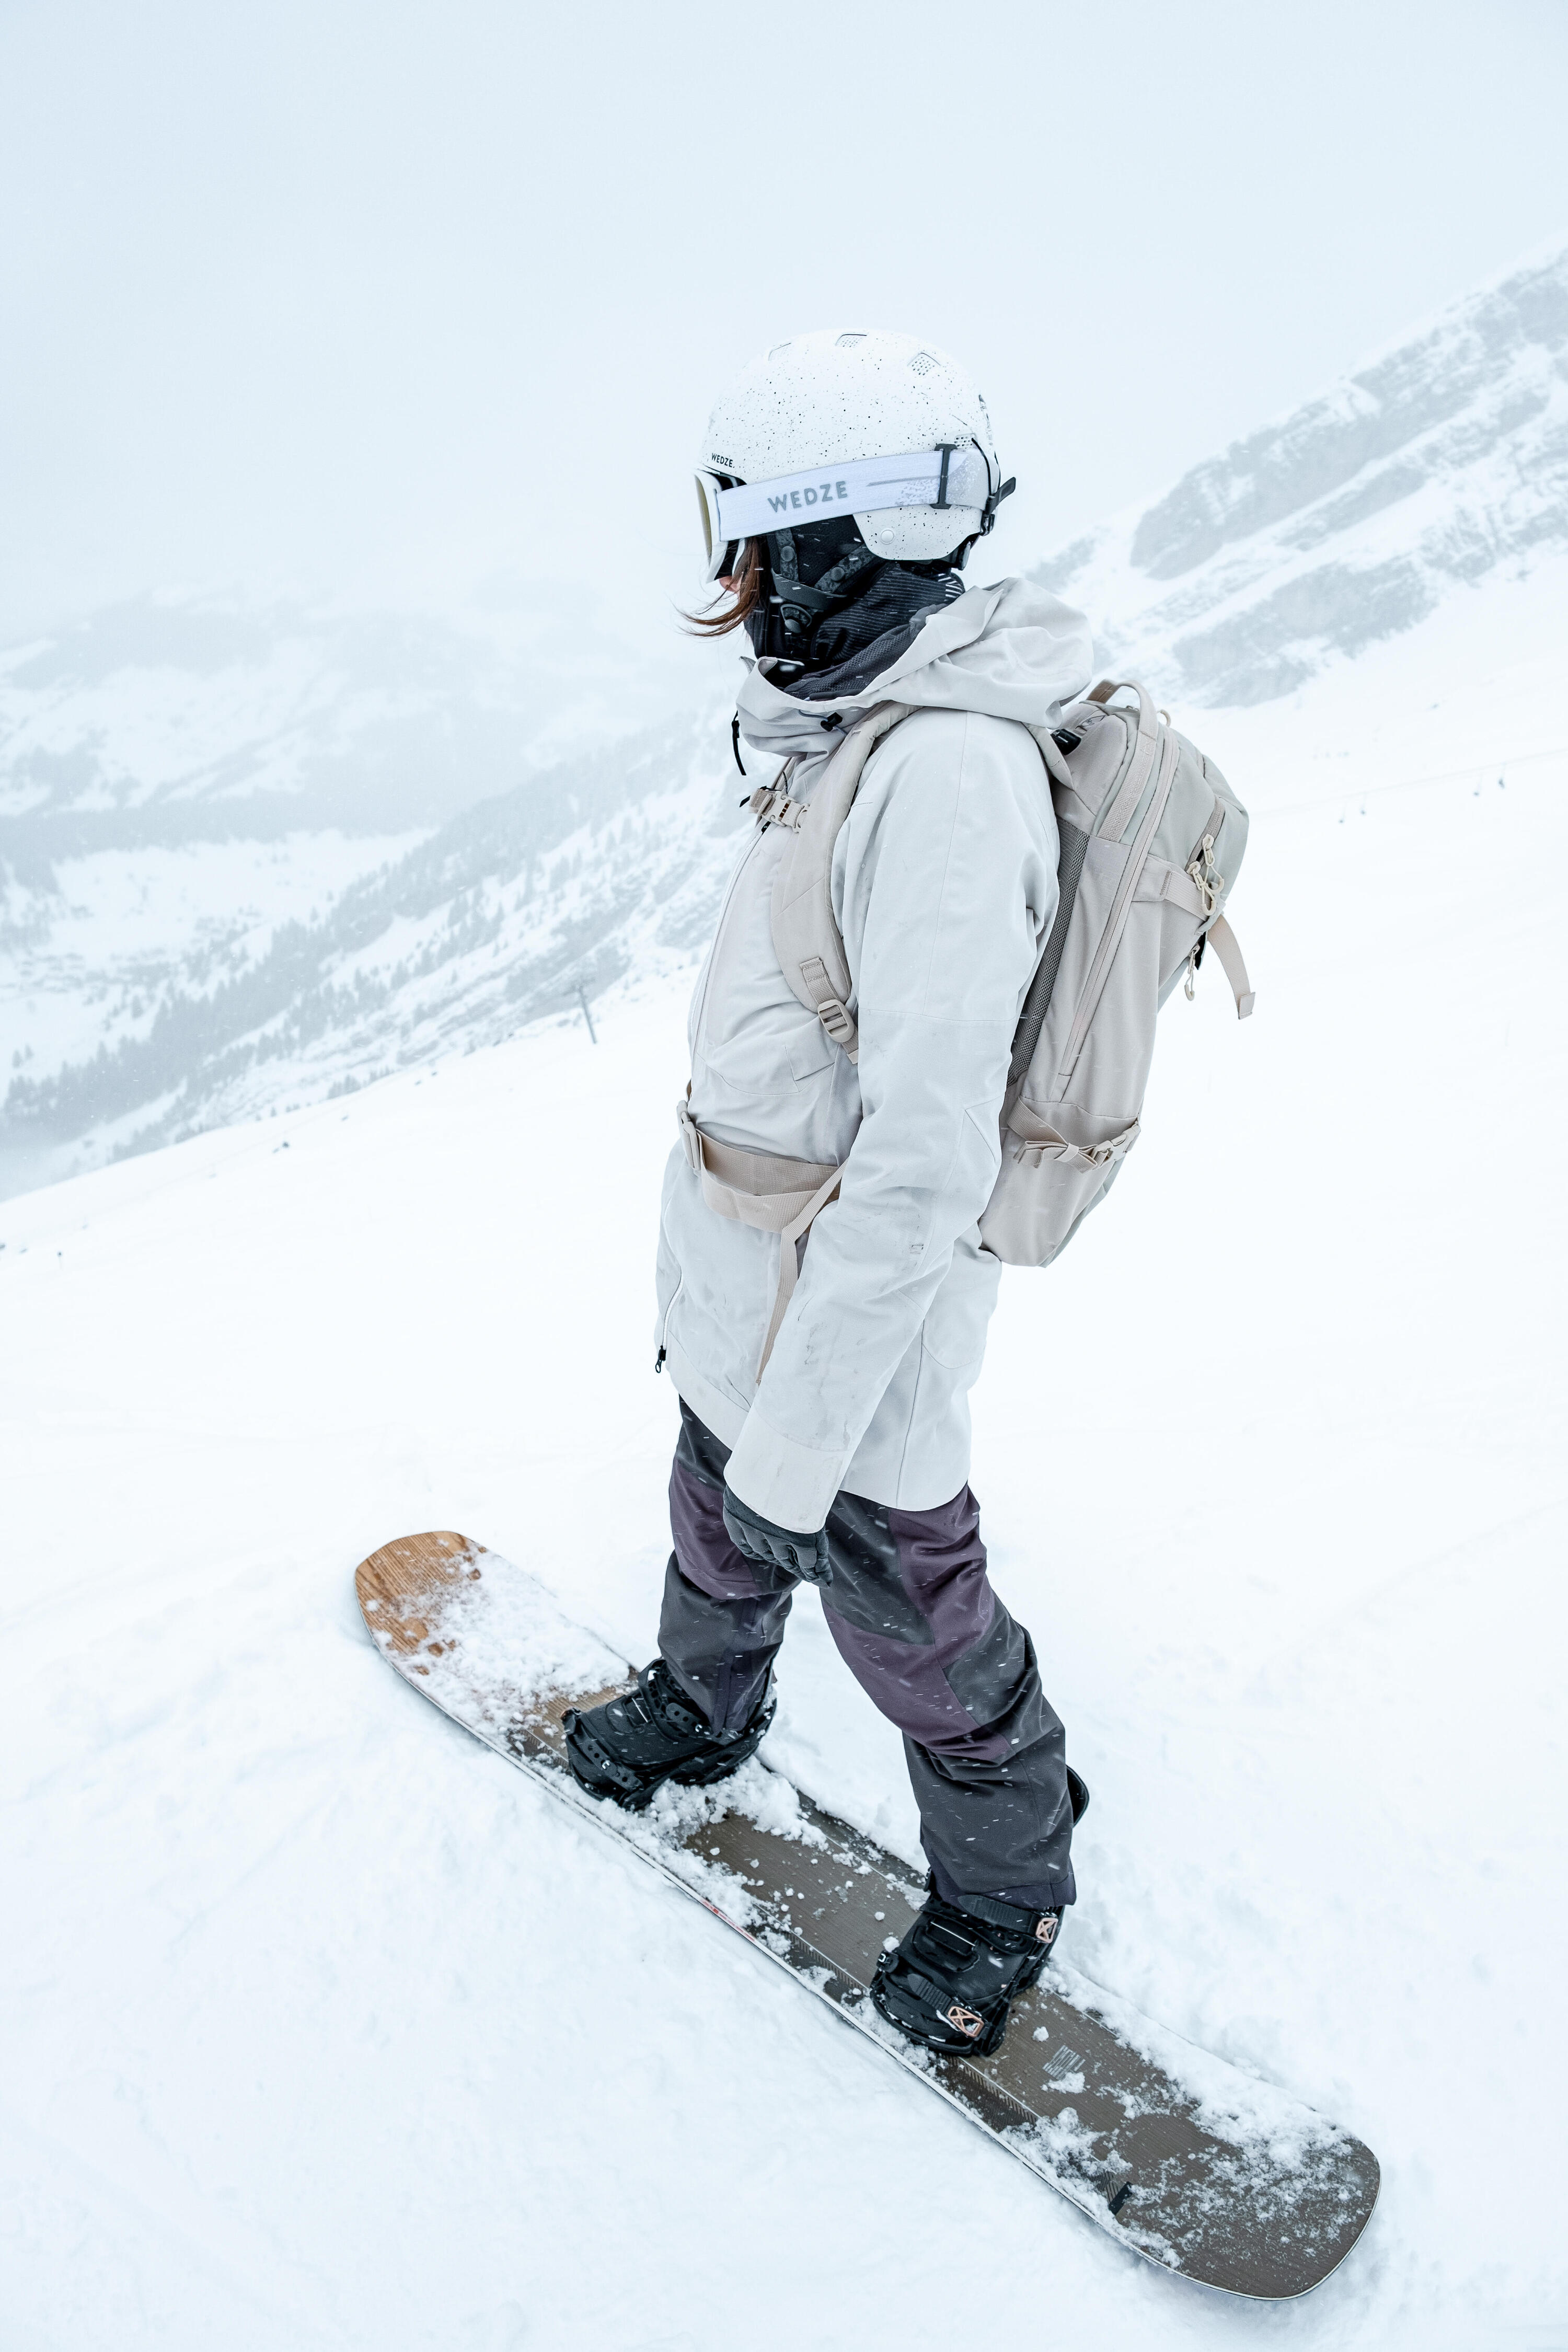 Double wheel snowboard boots, rigid flex - Allroad 900 Grey 2/15